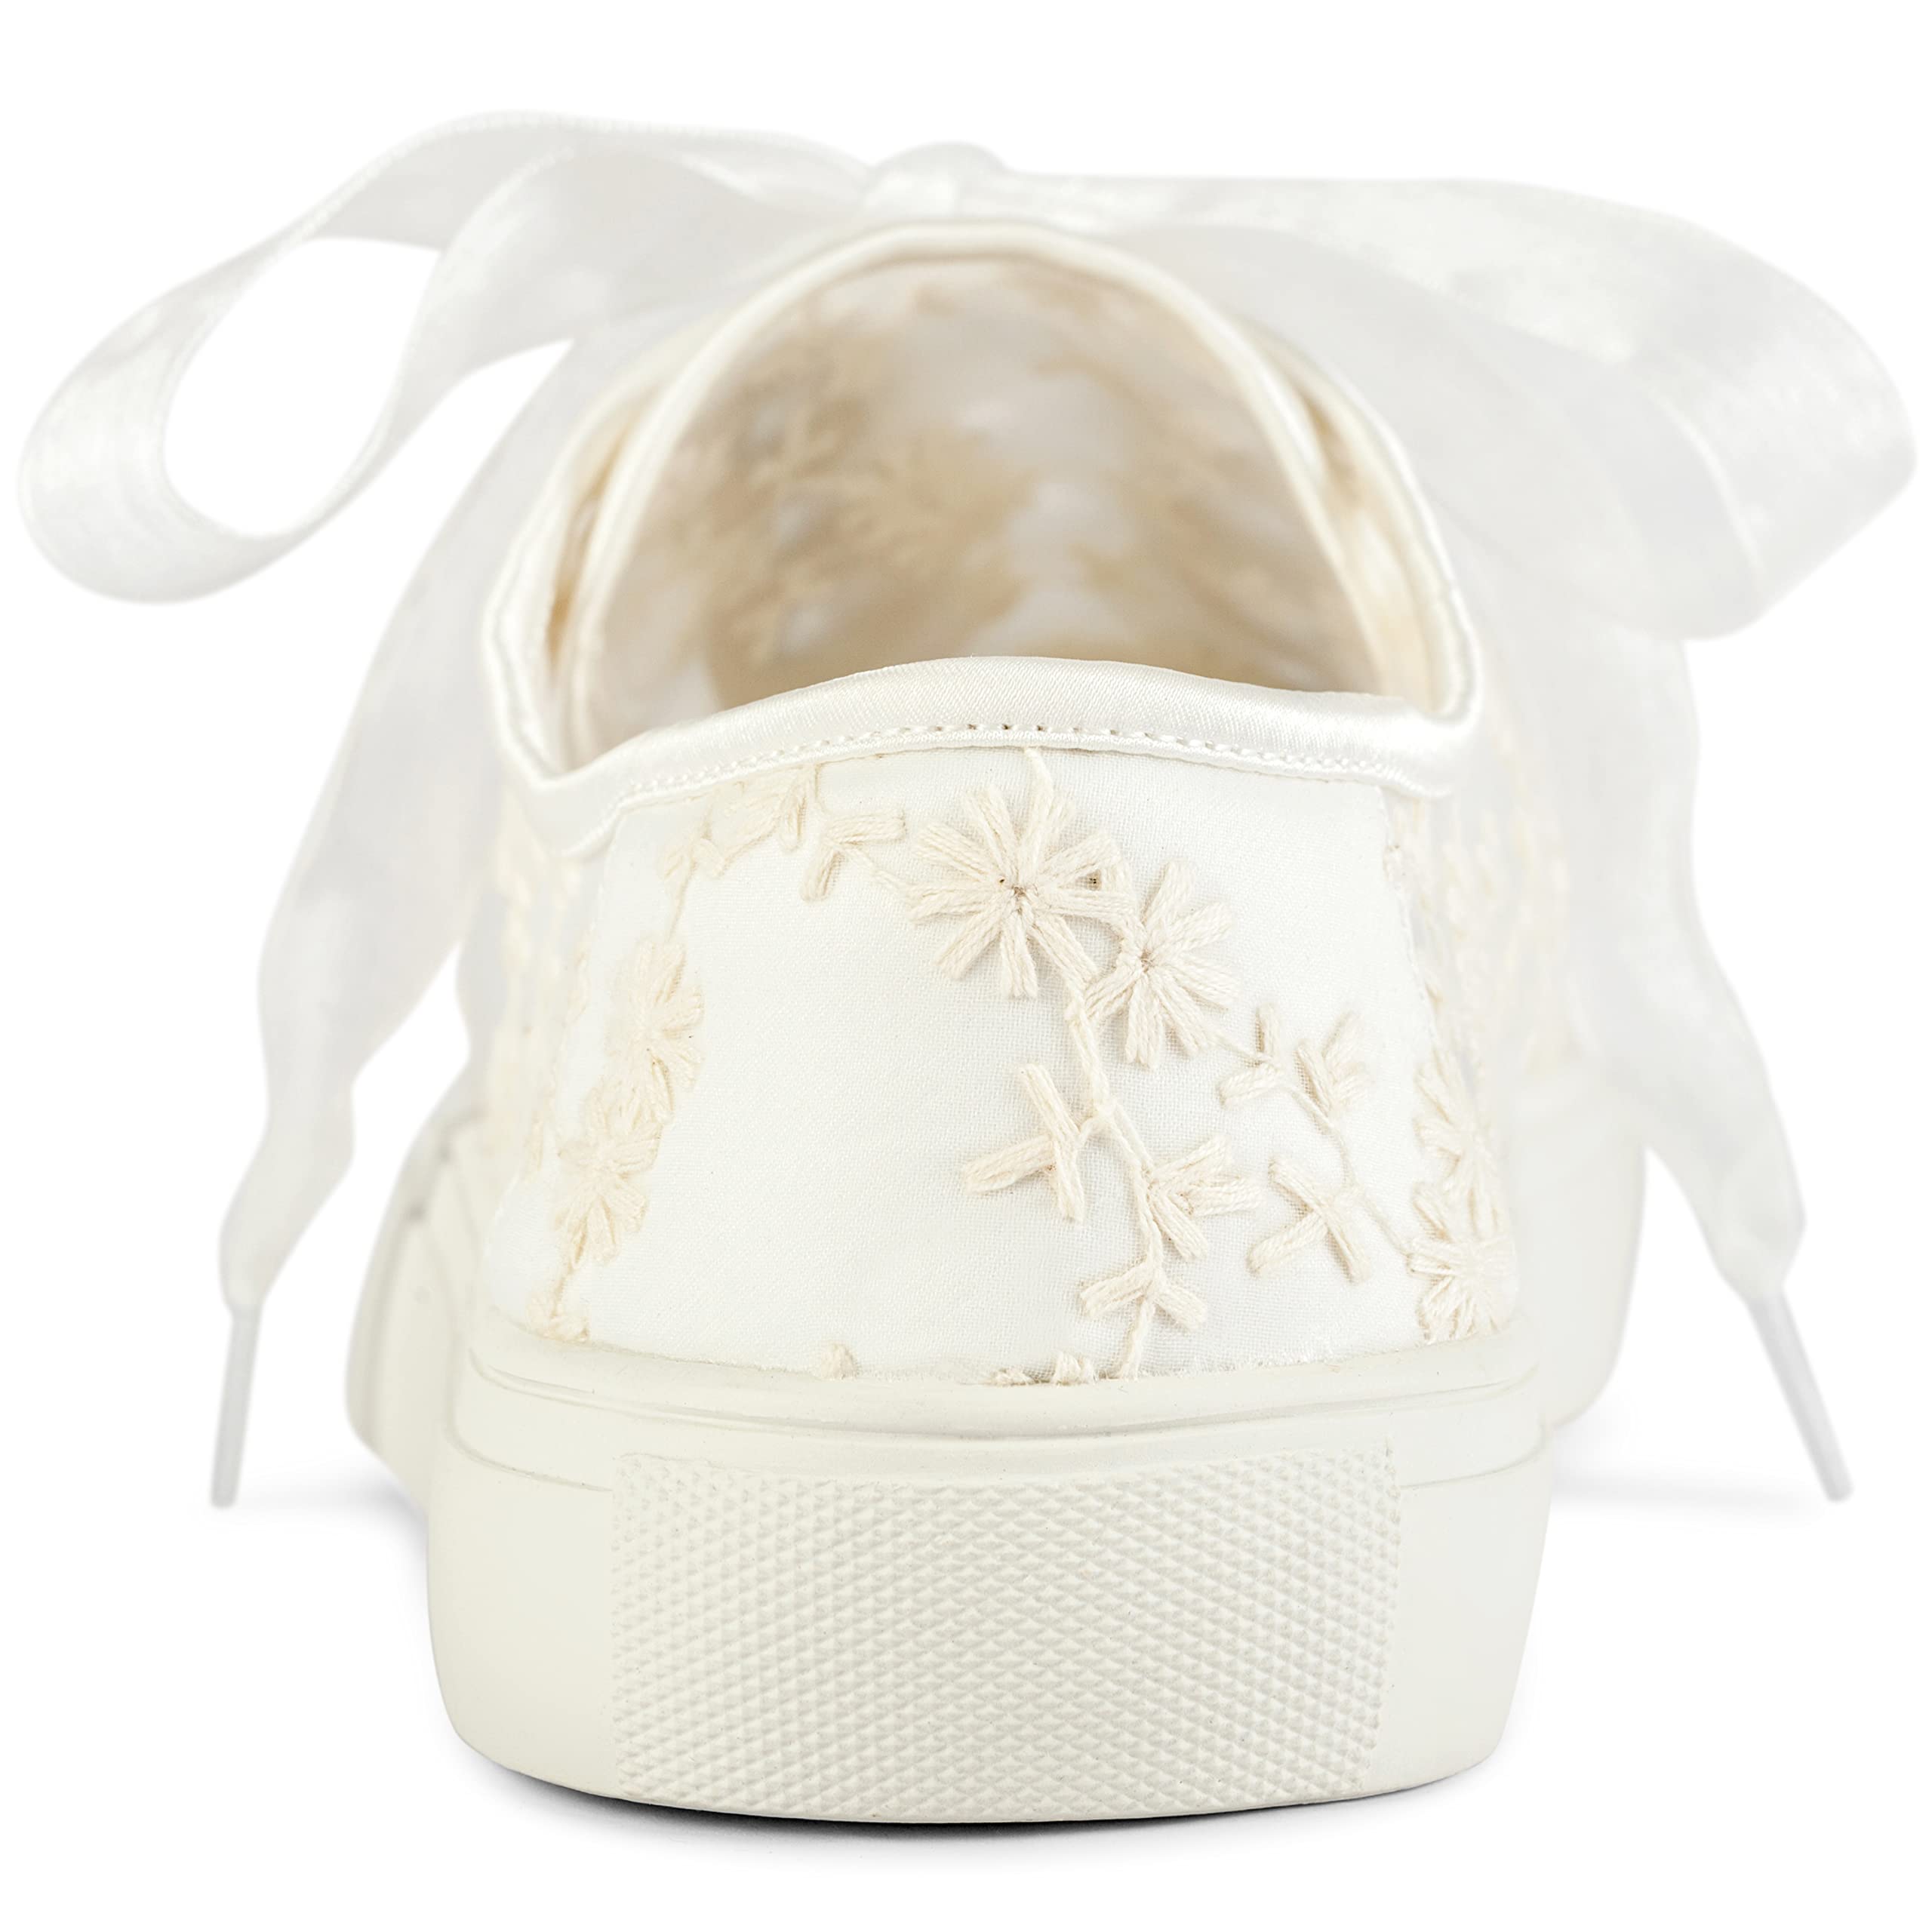 JIAJIA 8835 Wedding Shoes Bridal Sneakers Flats Bride Tennis Shoes Lace Sneakers Colour Ivory,Size 8 B(M) US/39 EU